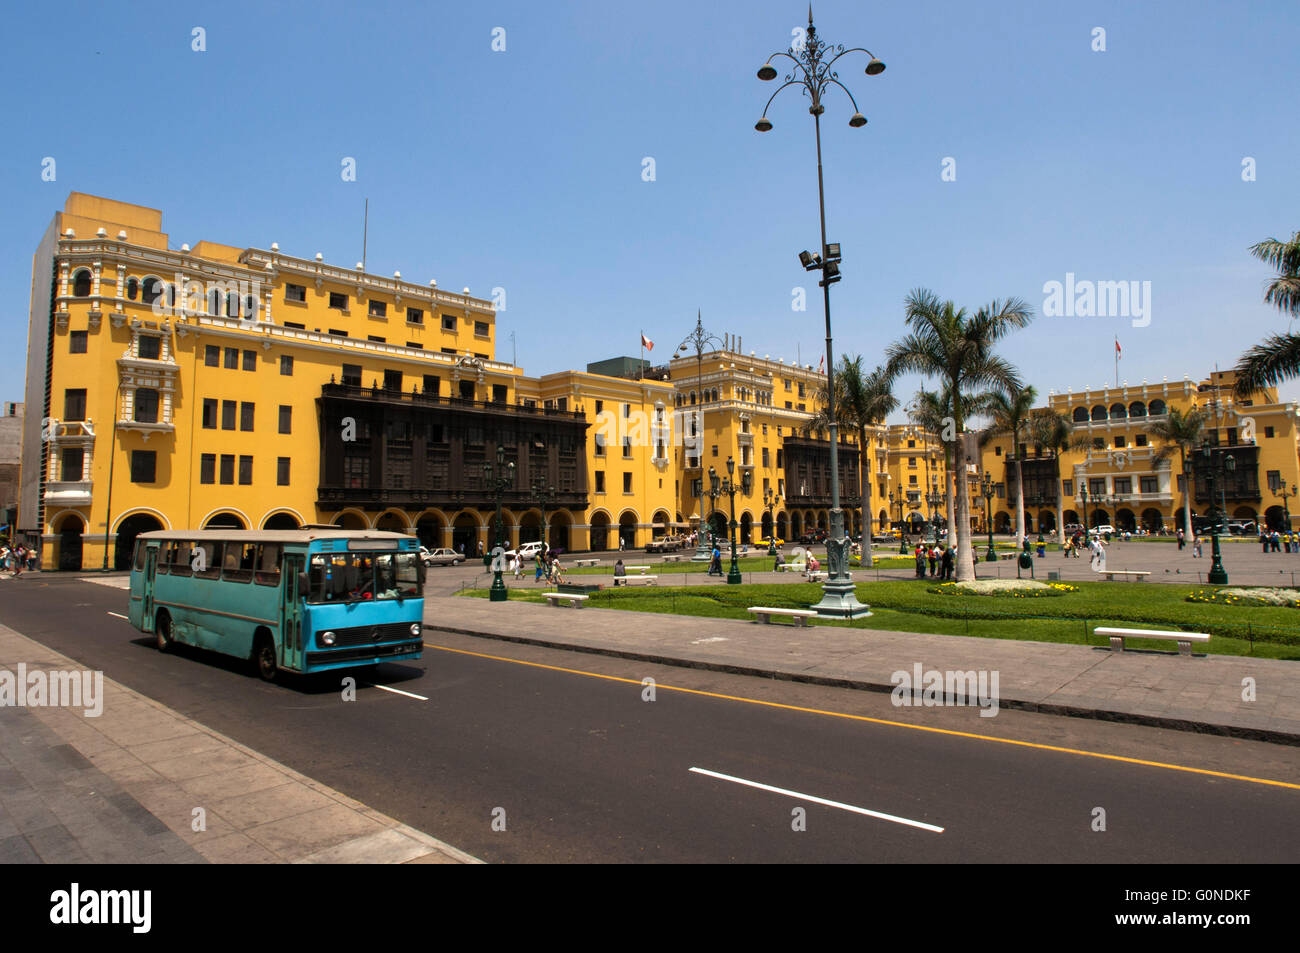 Old bus at Plaza de Armas square, Plaza Mayor, Peru, South America Stock Photo